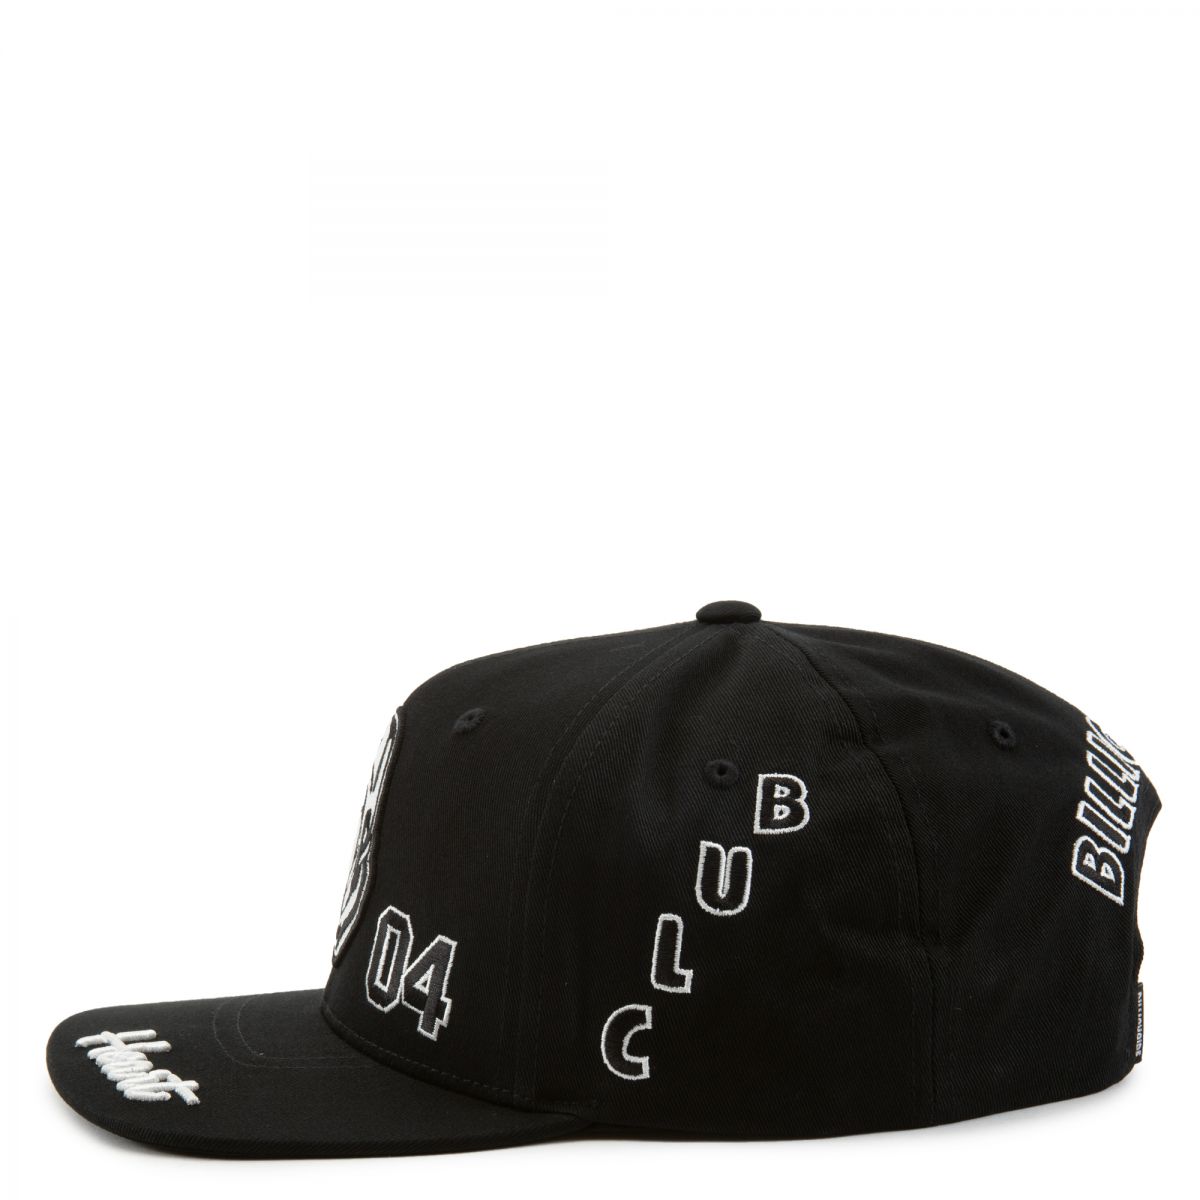 Billionaire Boys Club BB Captain Snapback Hat 801-1803 Black 2020 Brand New